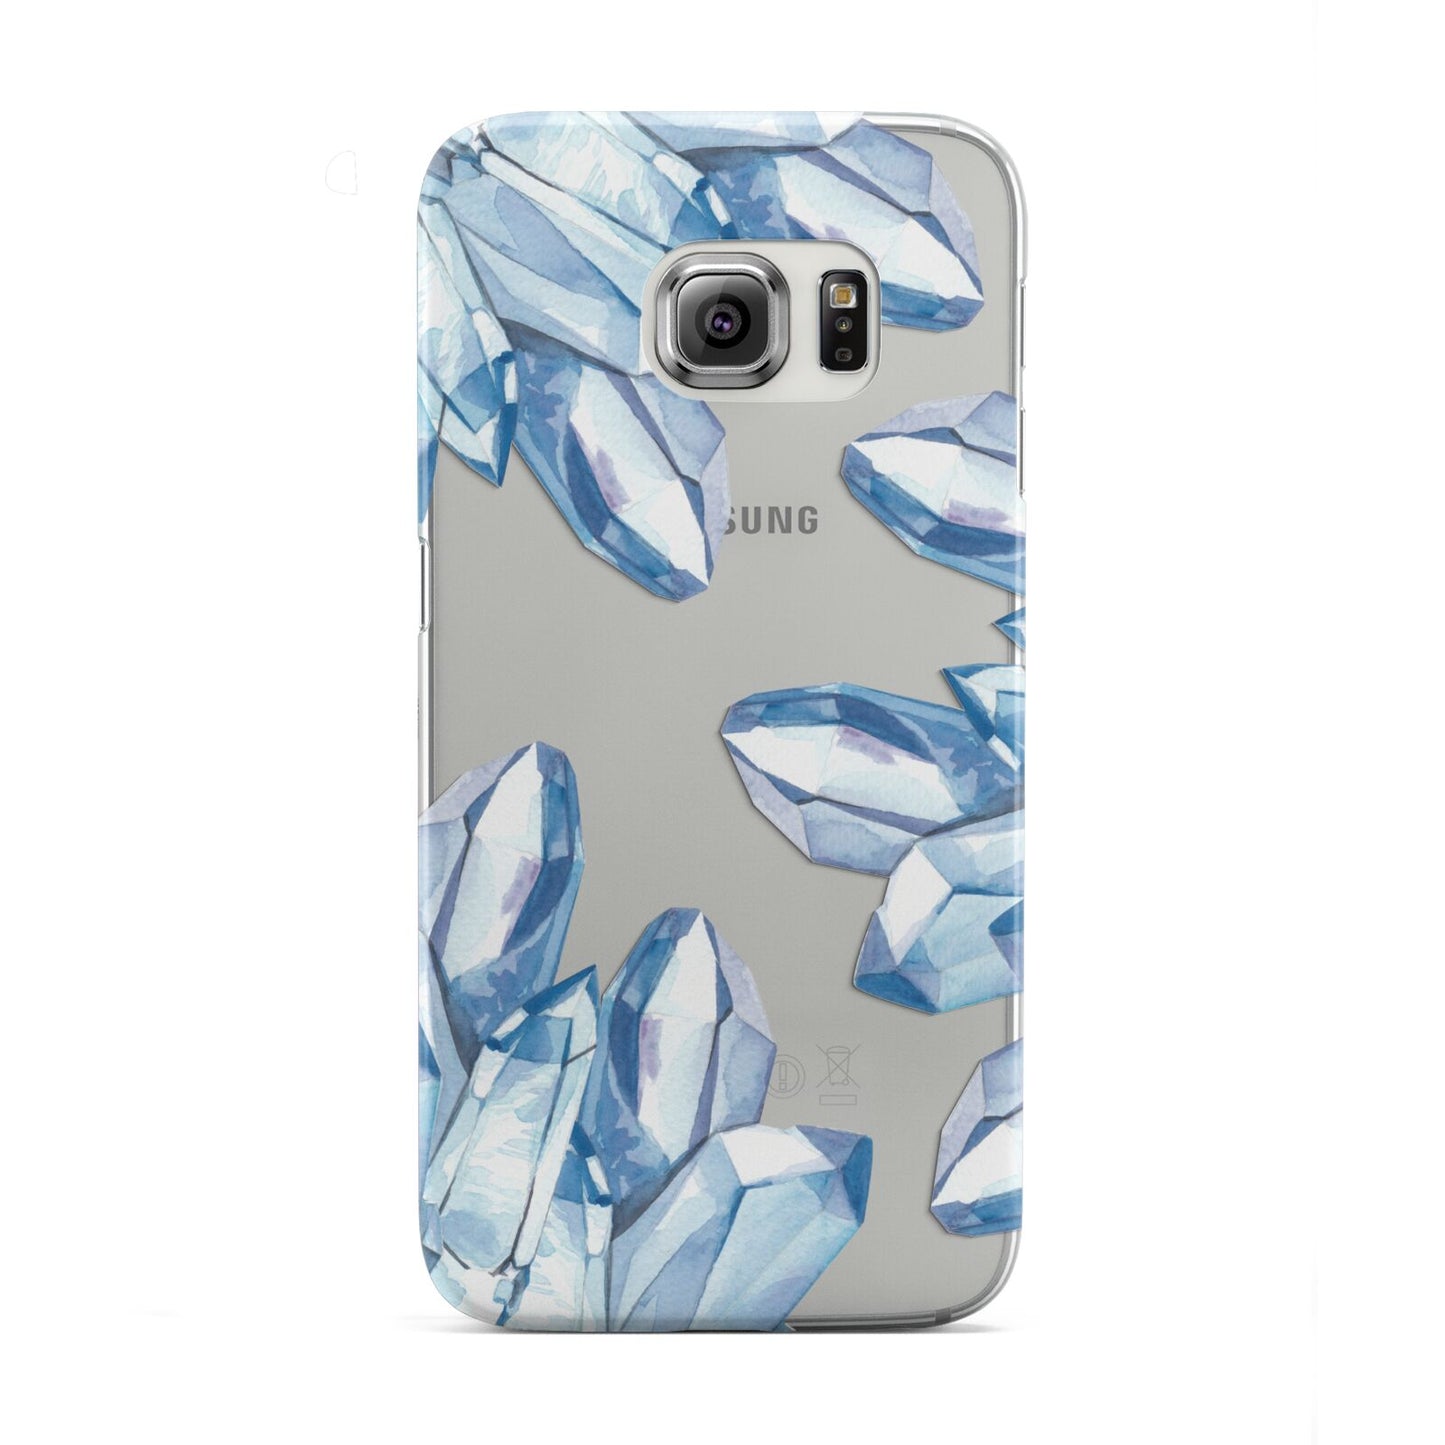 Blue Crystals Samsung Galaxy S6 Edge Case